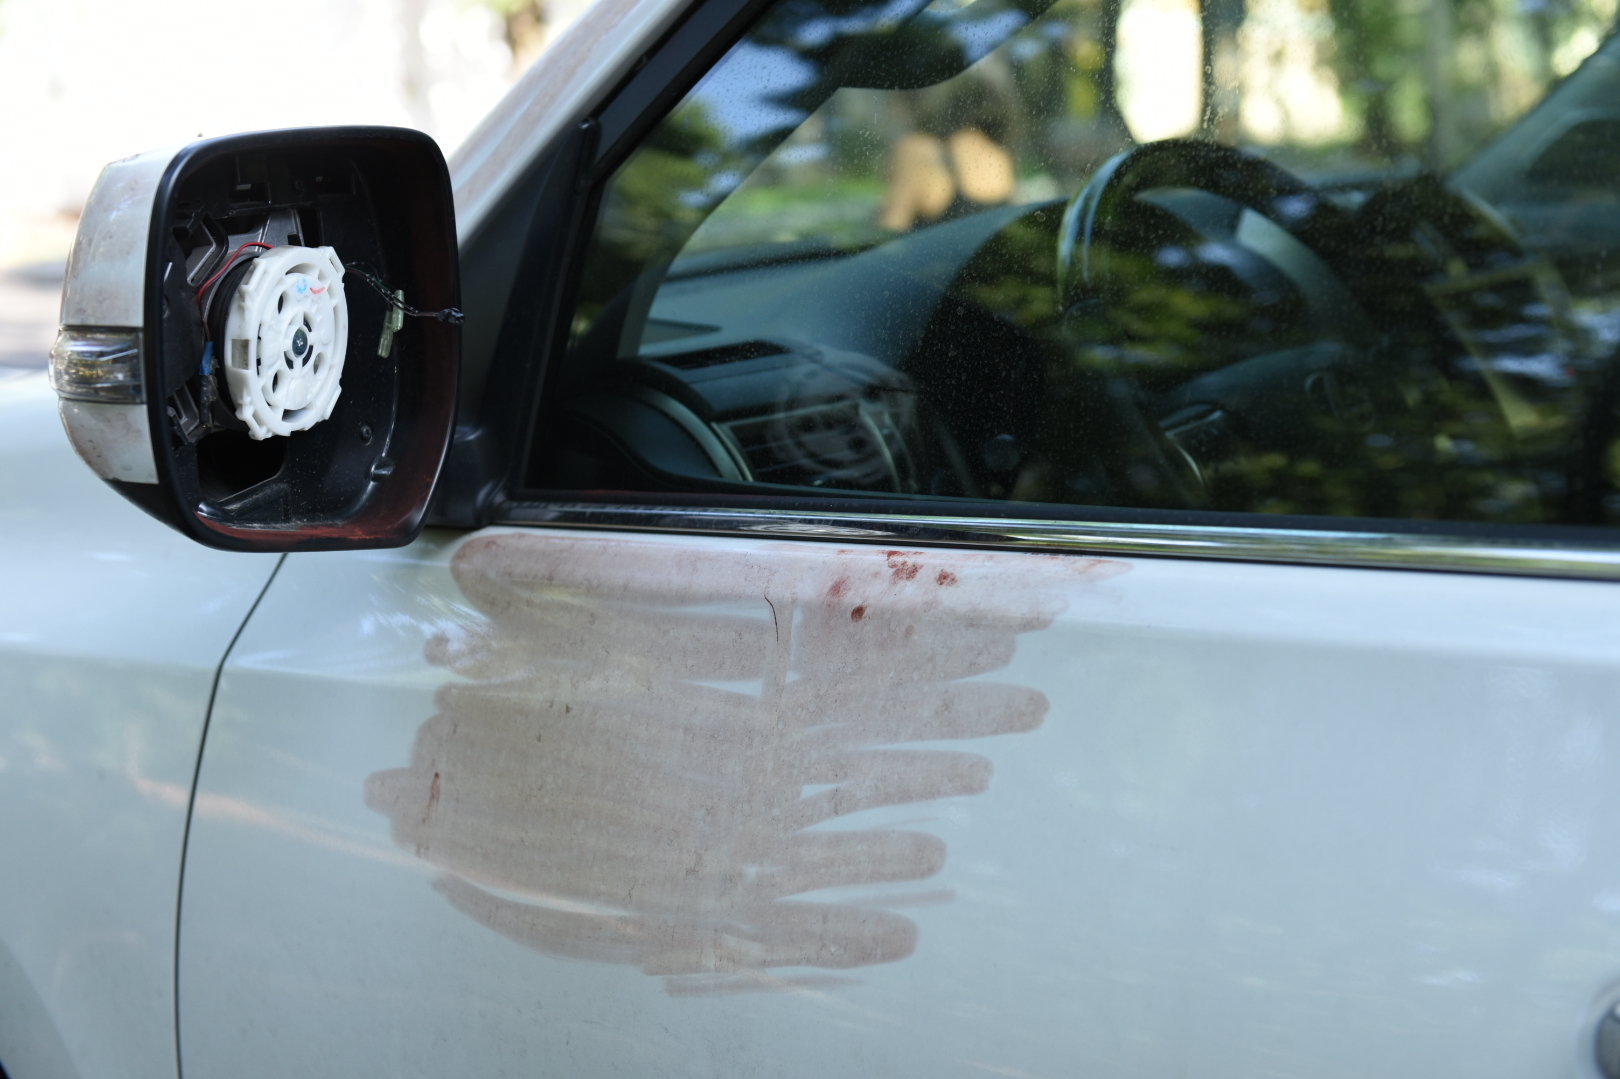 Автомобиль Дениса Тена со снятыми зеркалами. Фото с места трагедии.